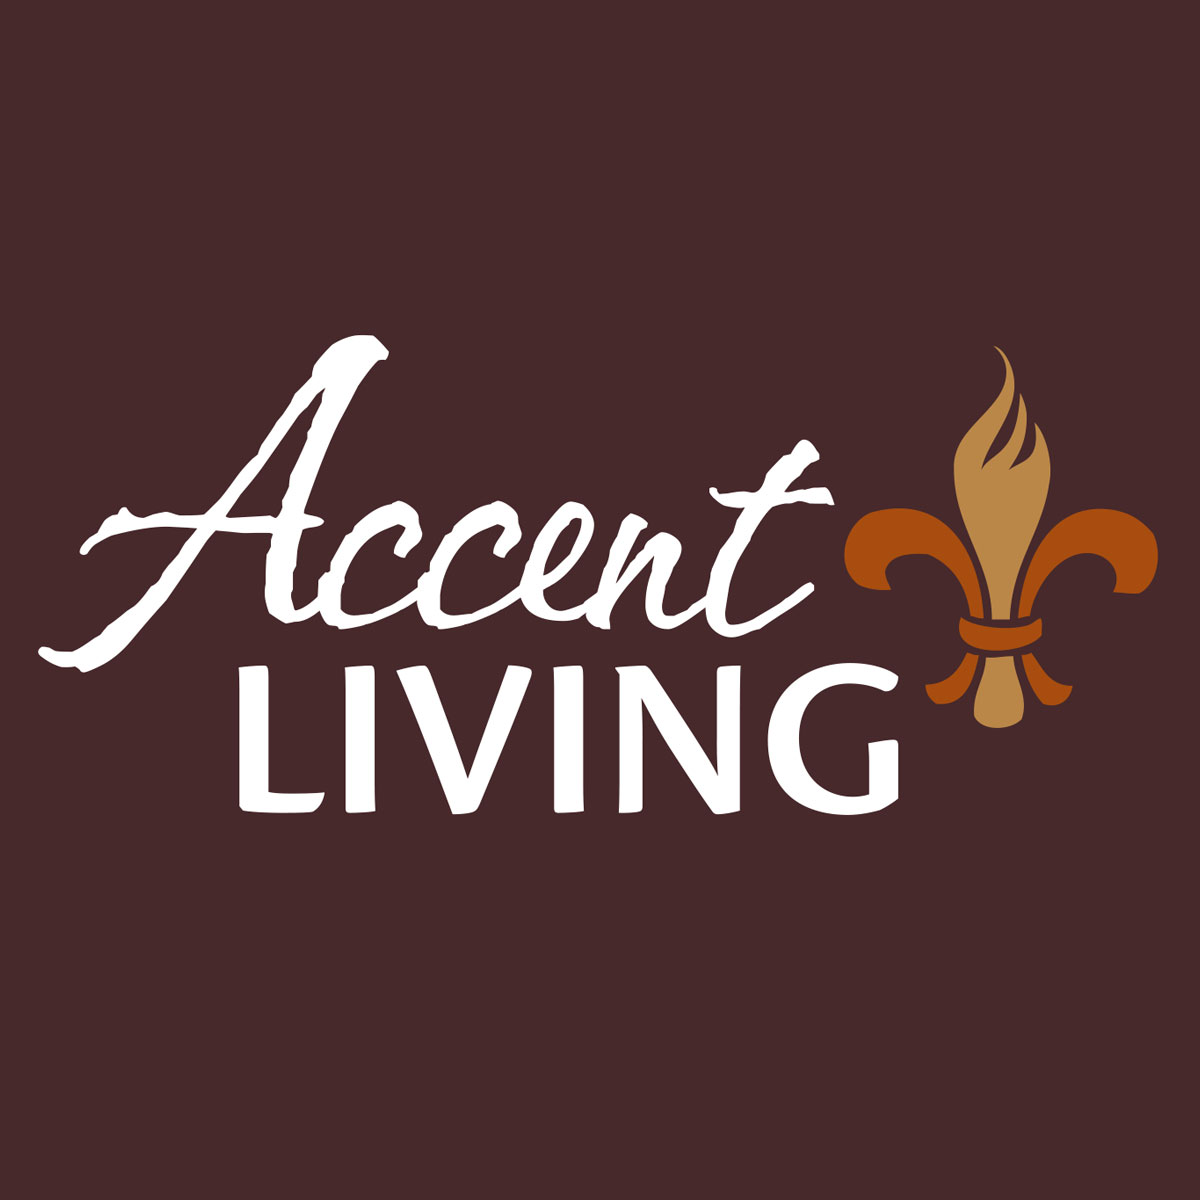 Accent Living logo